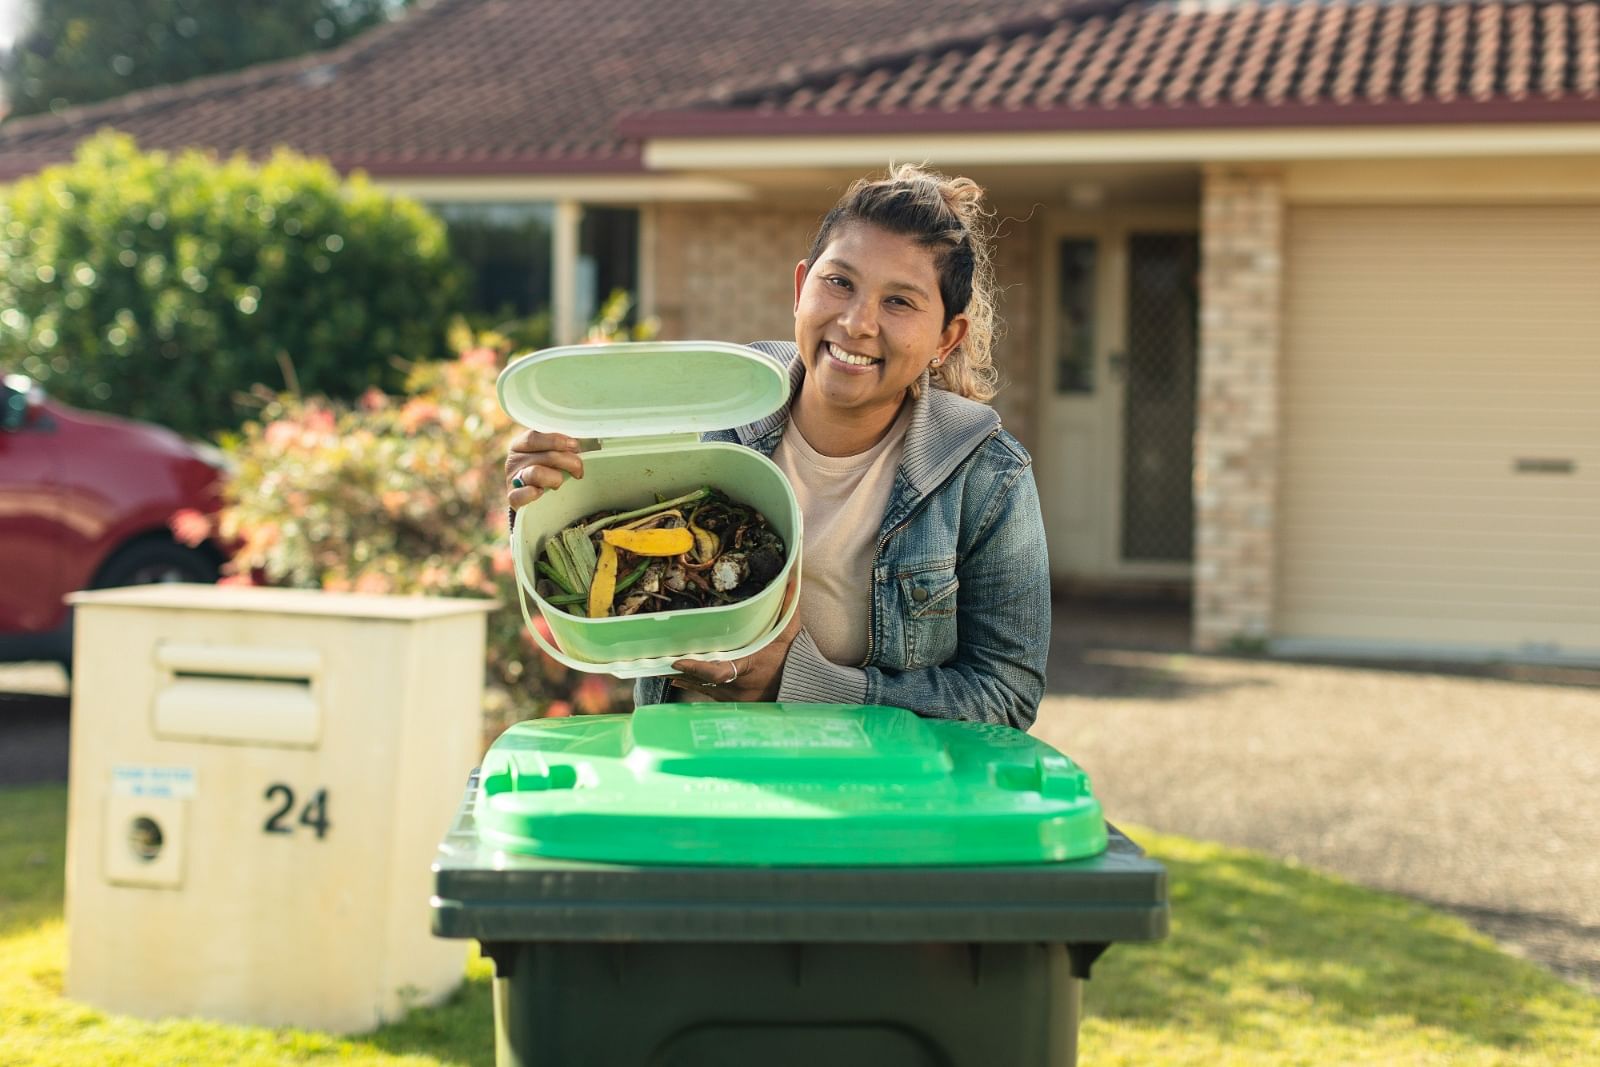 A woman holding a full FOGO caddy bin above a green lid food and organics bin